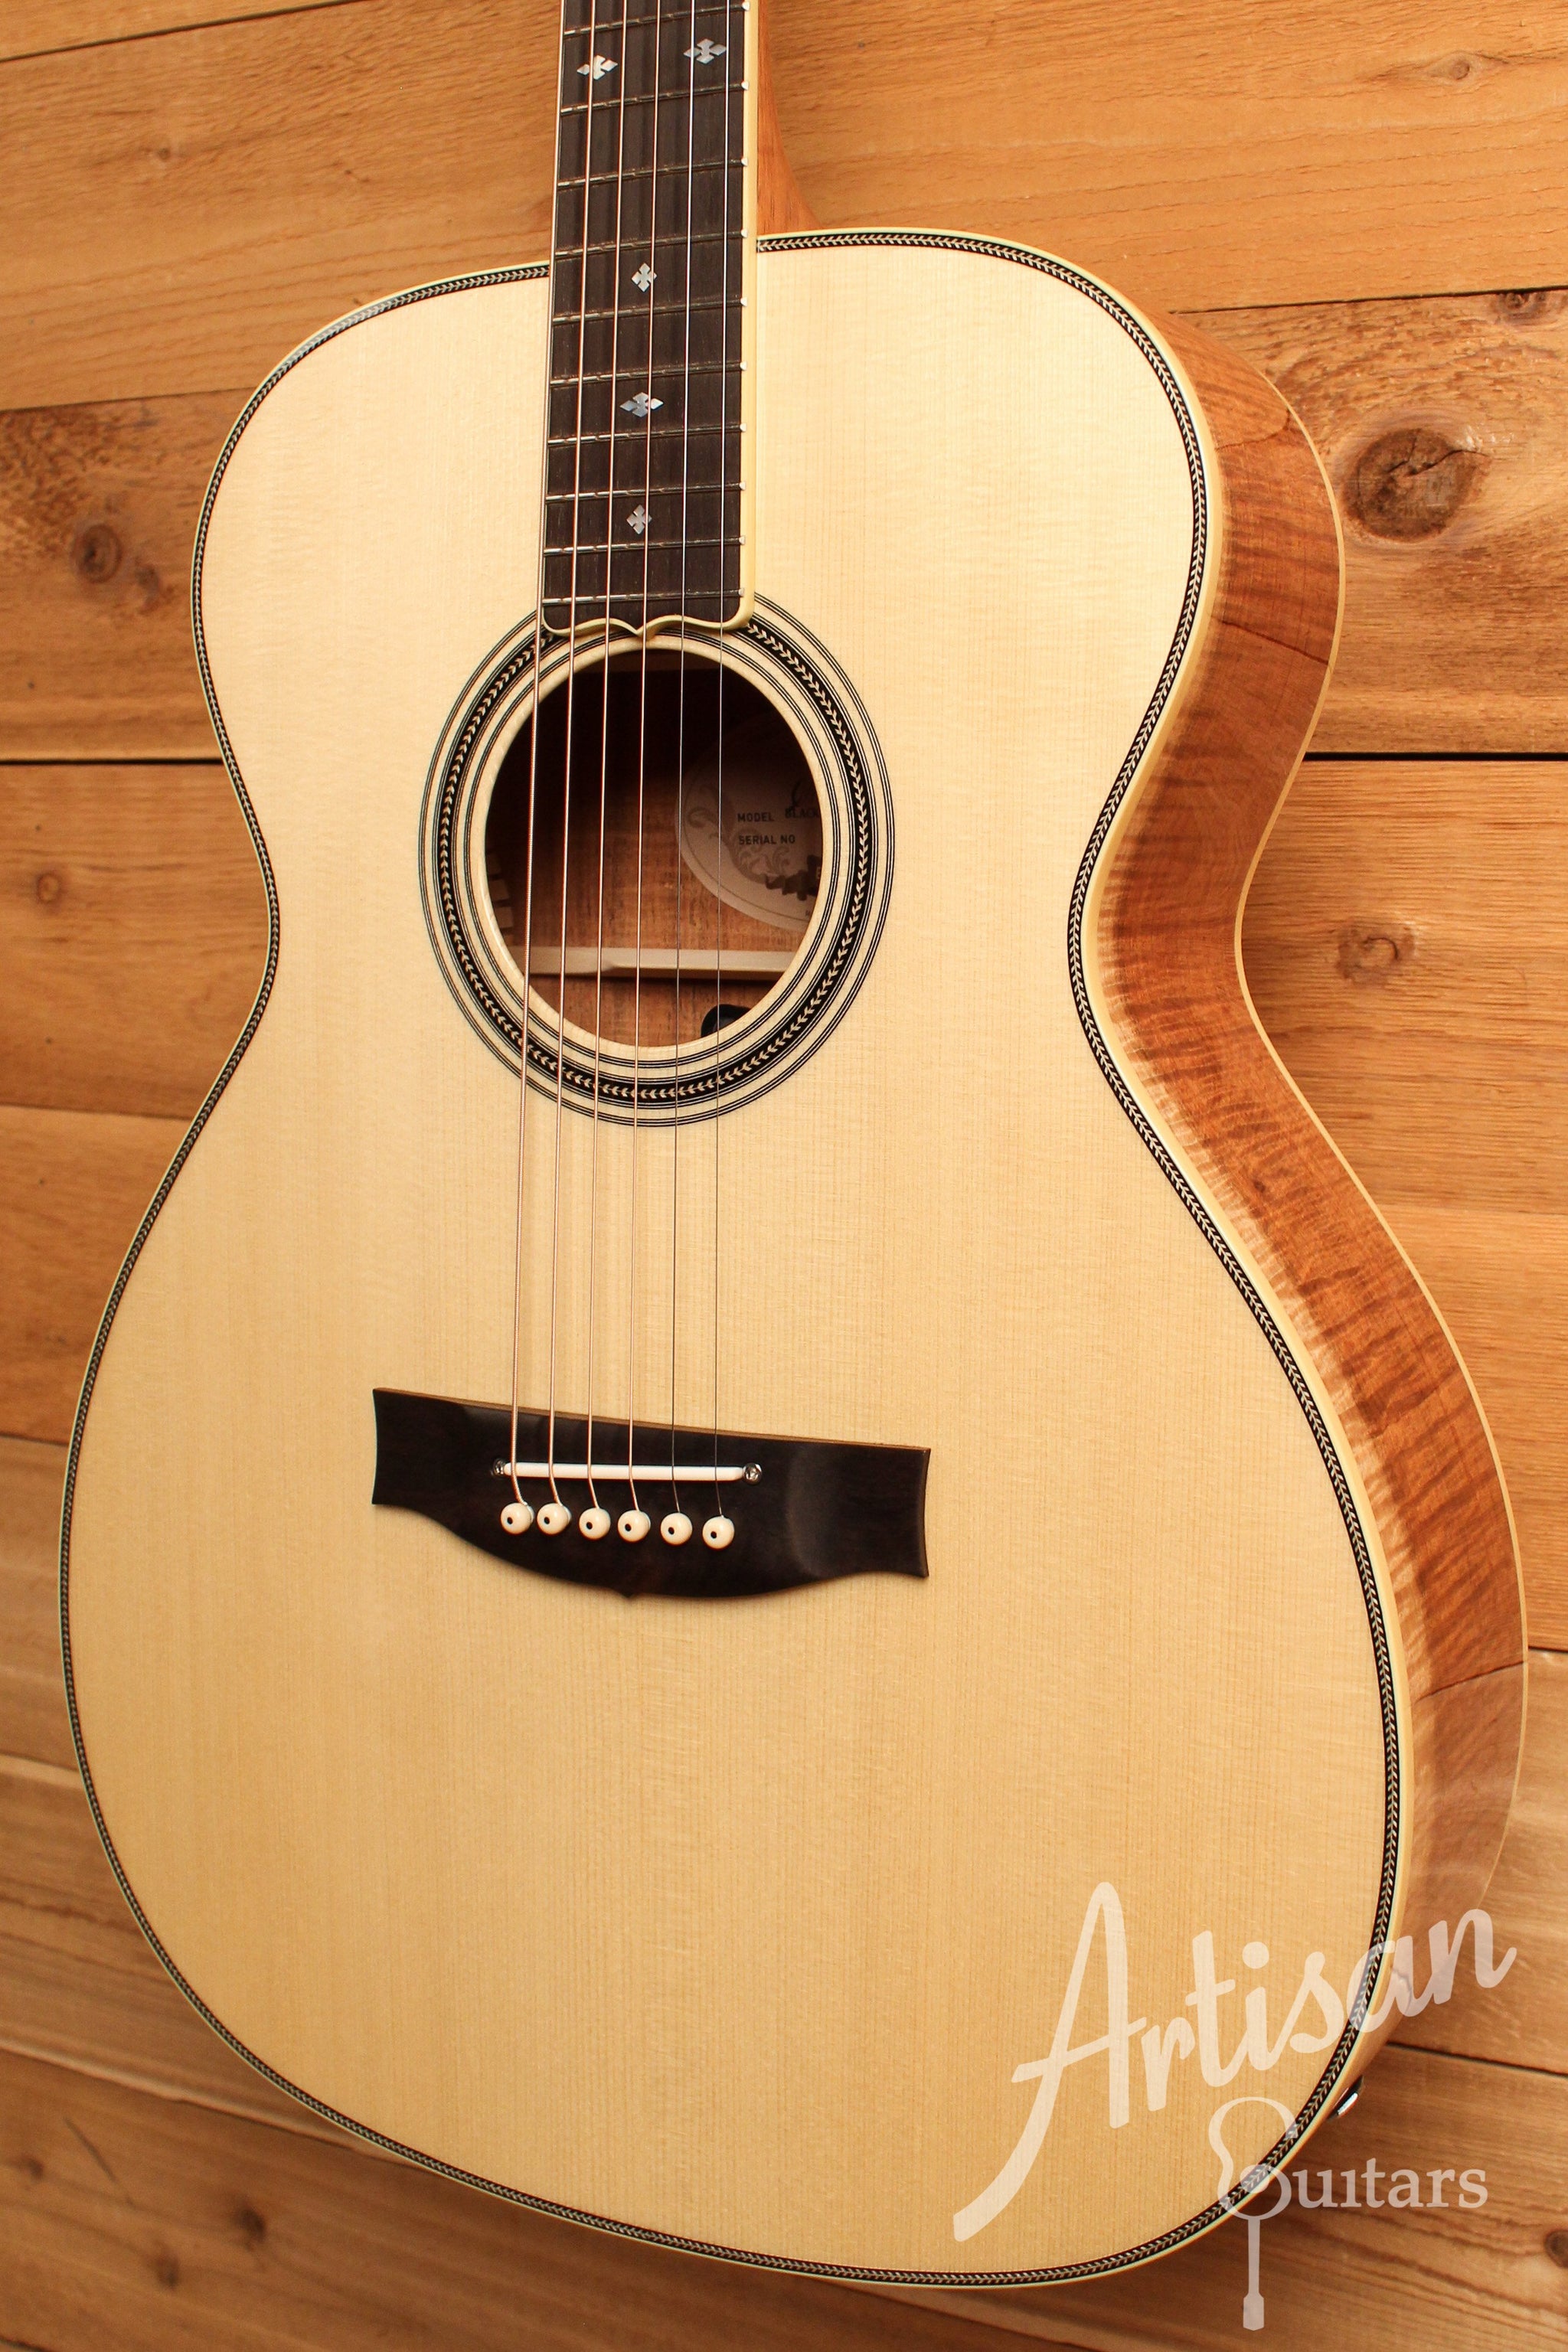 Maton Custom Shop Classic Blackwood Special Guitar with European Spruce & Figured Blackwood  ID-12820 - Artisan Guitars